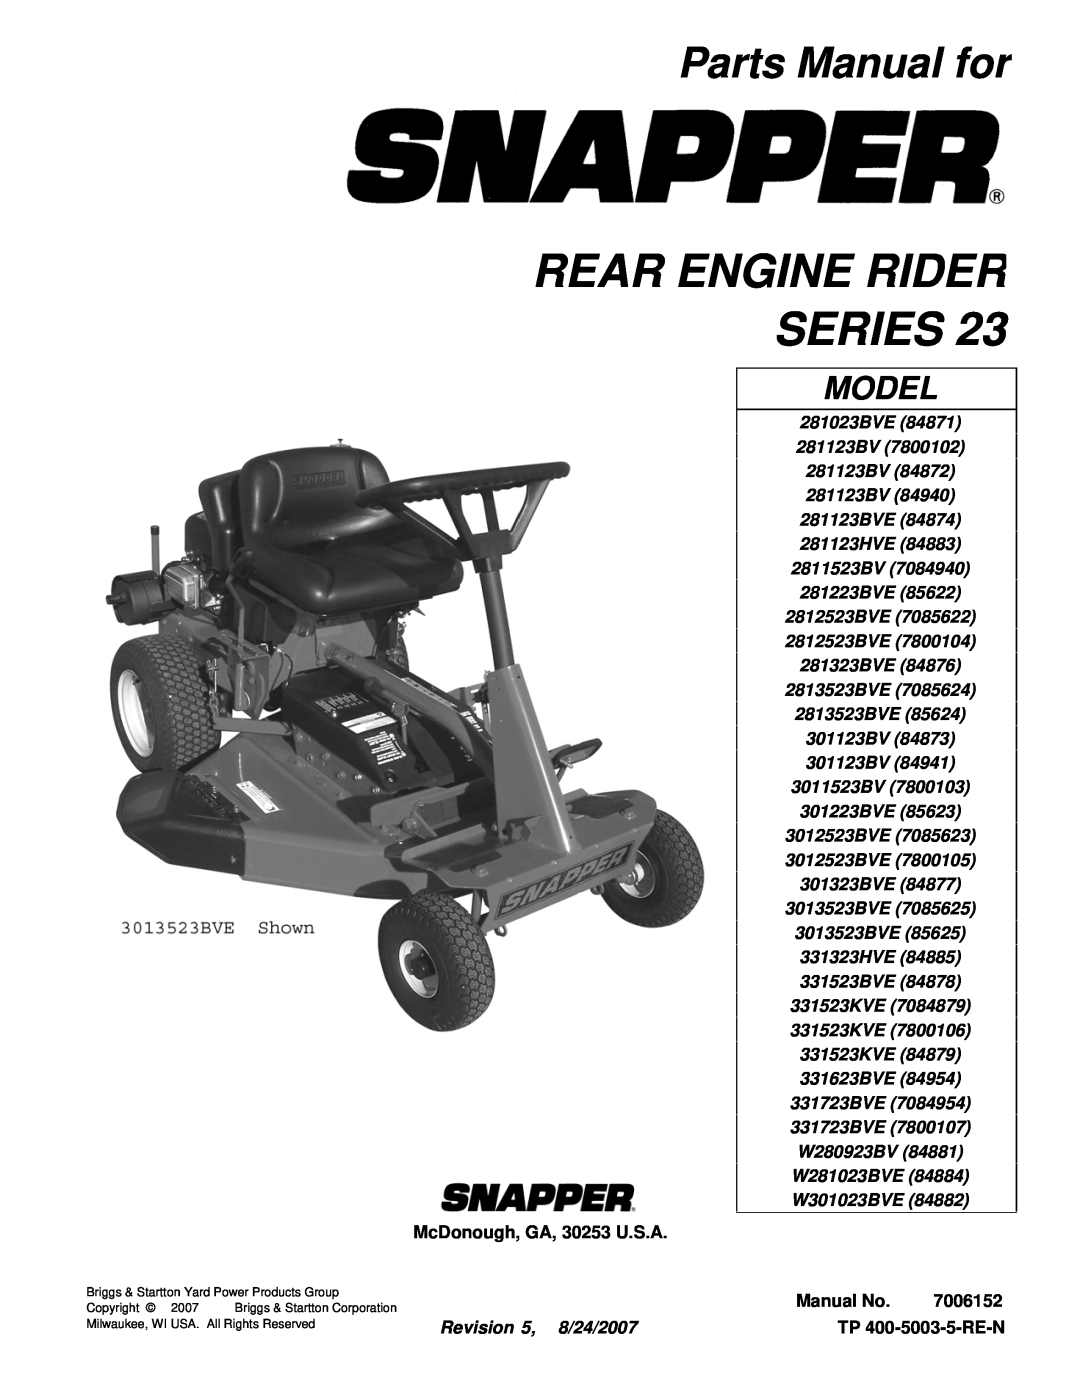 Snapper 281023BVE manual Parts Manual for, Rear Engine Rider Series, Model, McDonough, GA, 30253 U.S.A, Manual No, 7006152 